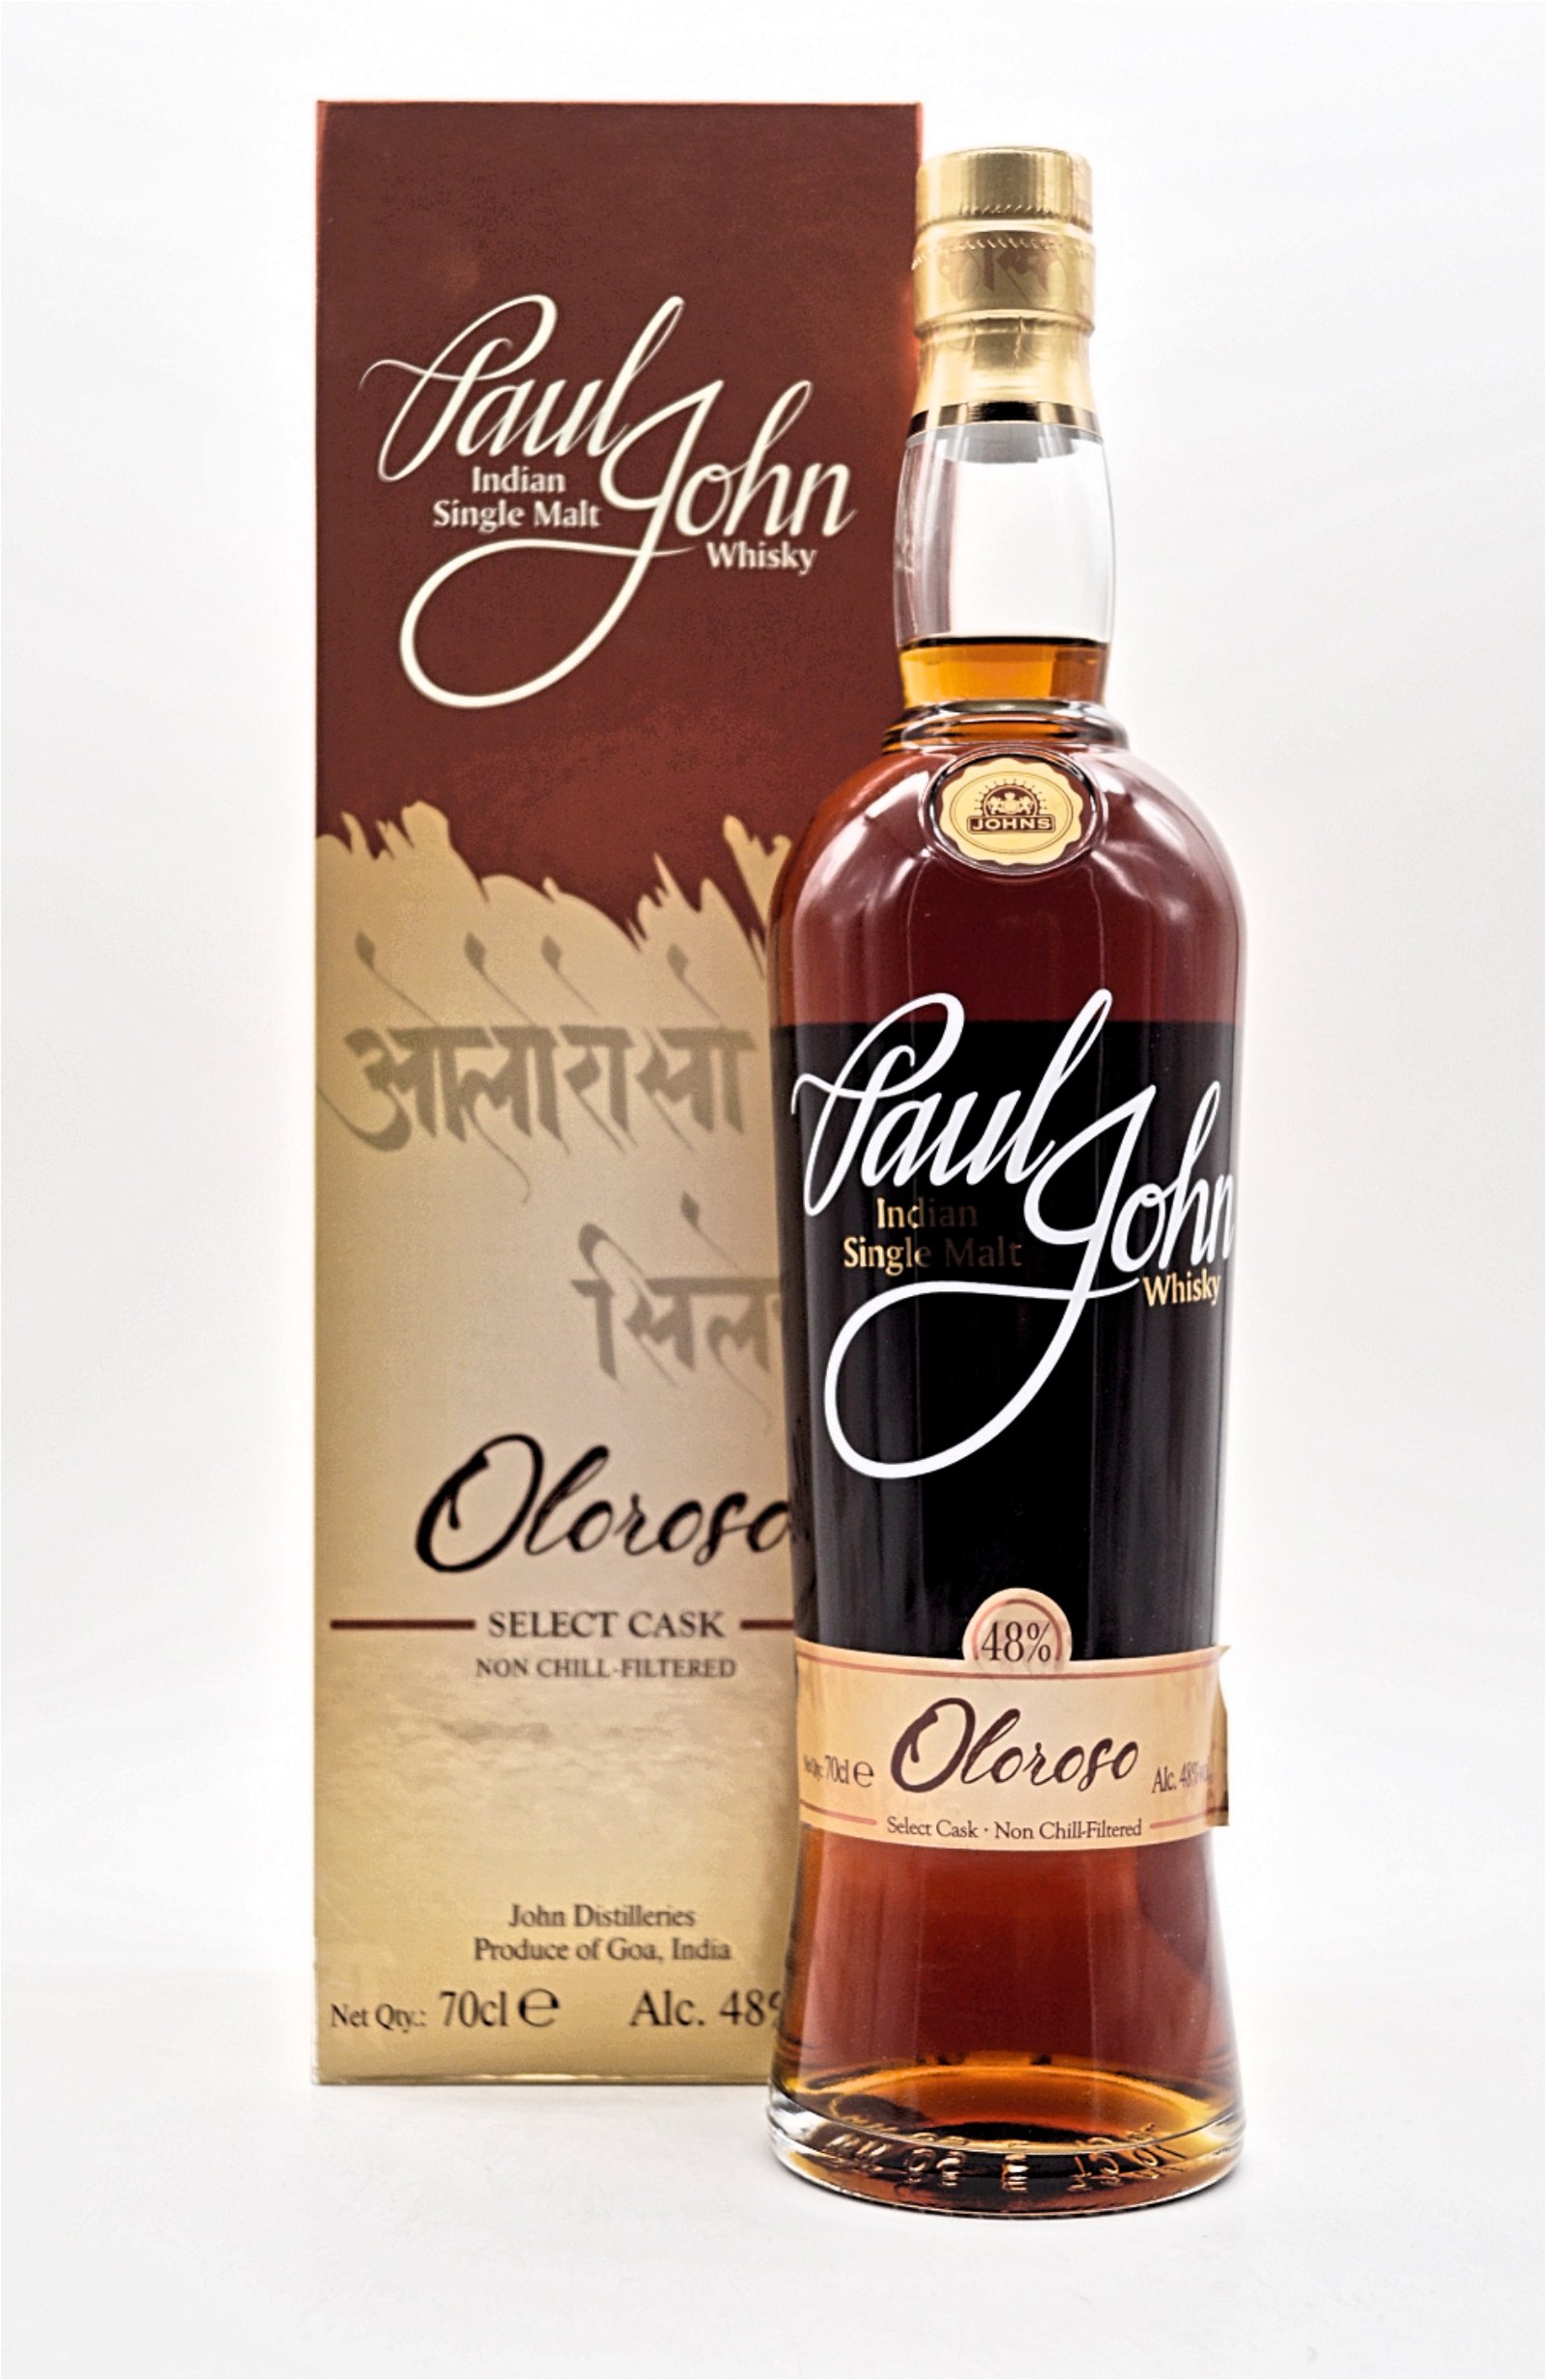 Paul John Oloroso Select Cask Batch 1 Indian Single Malt Whisky 